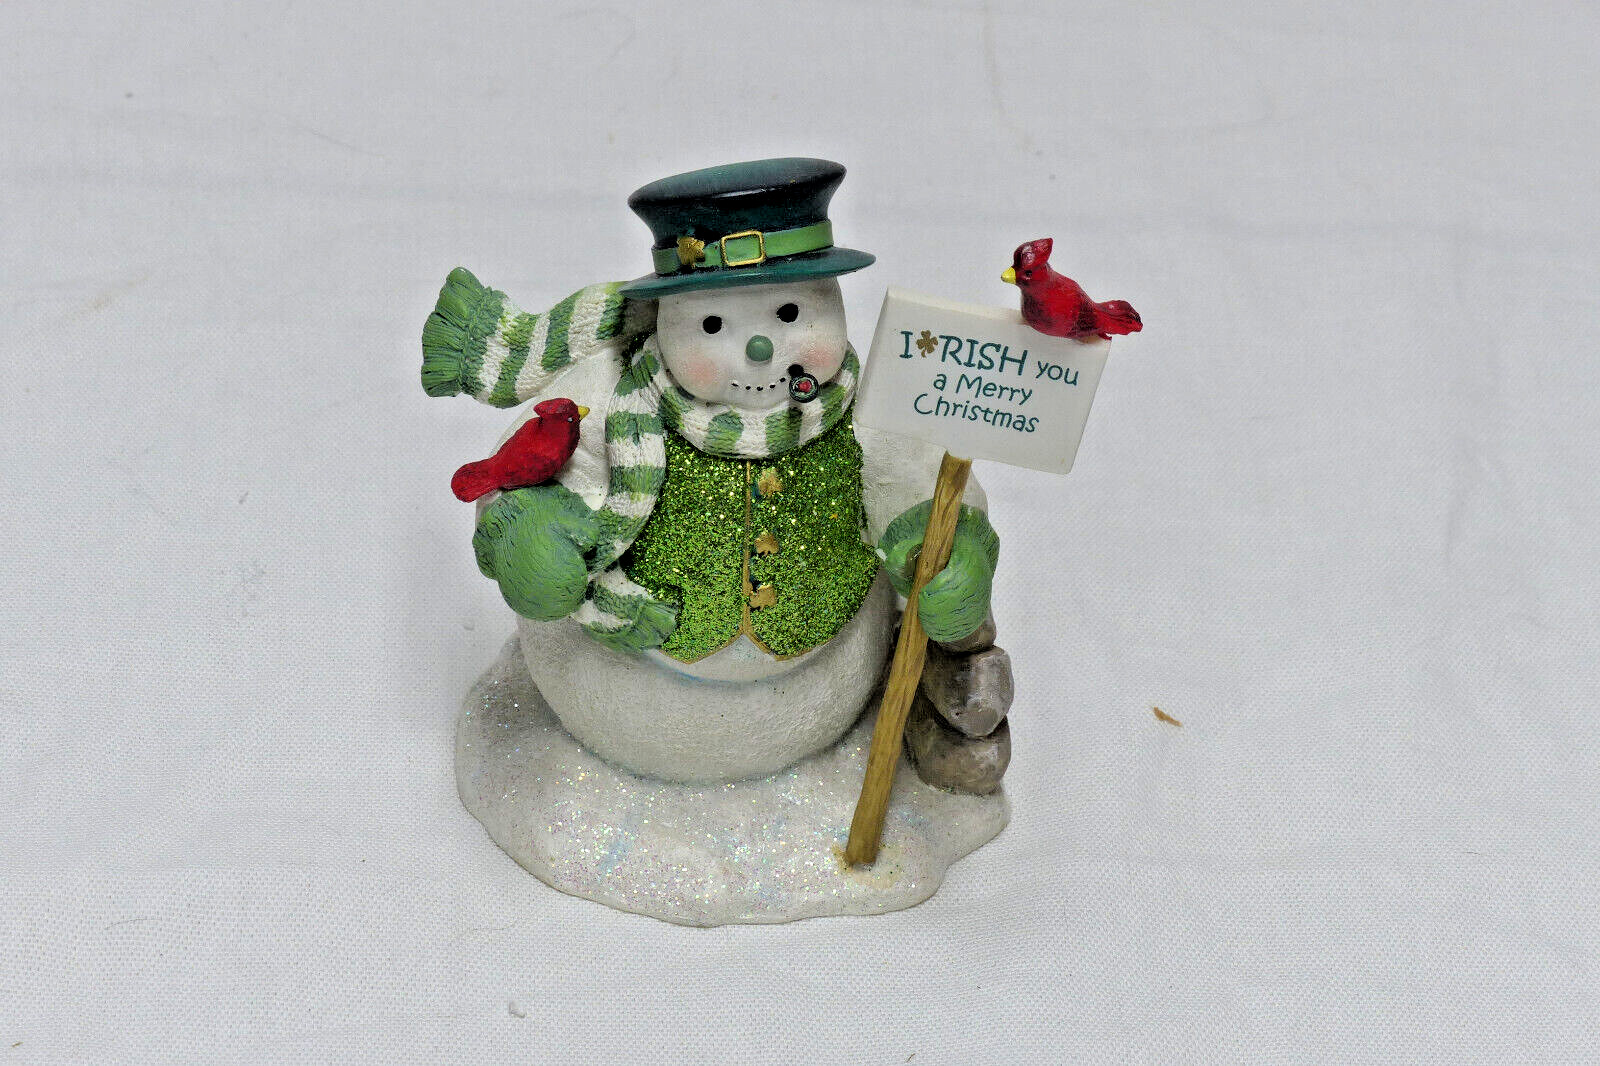 Hamilton Collection Irish Wishes Snowman Figurine I-rish You a Merry Christmas